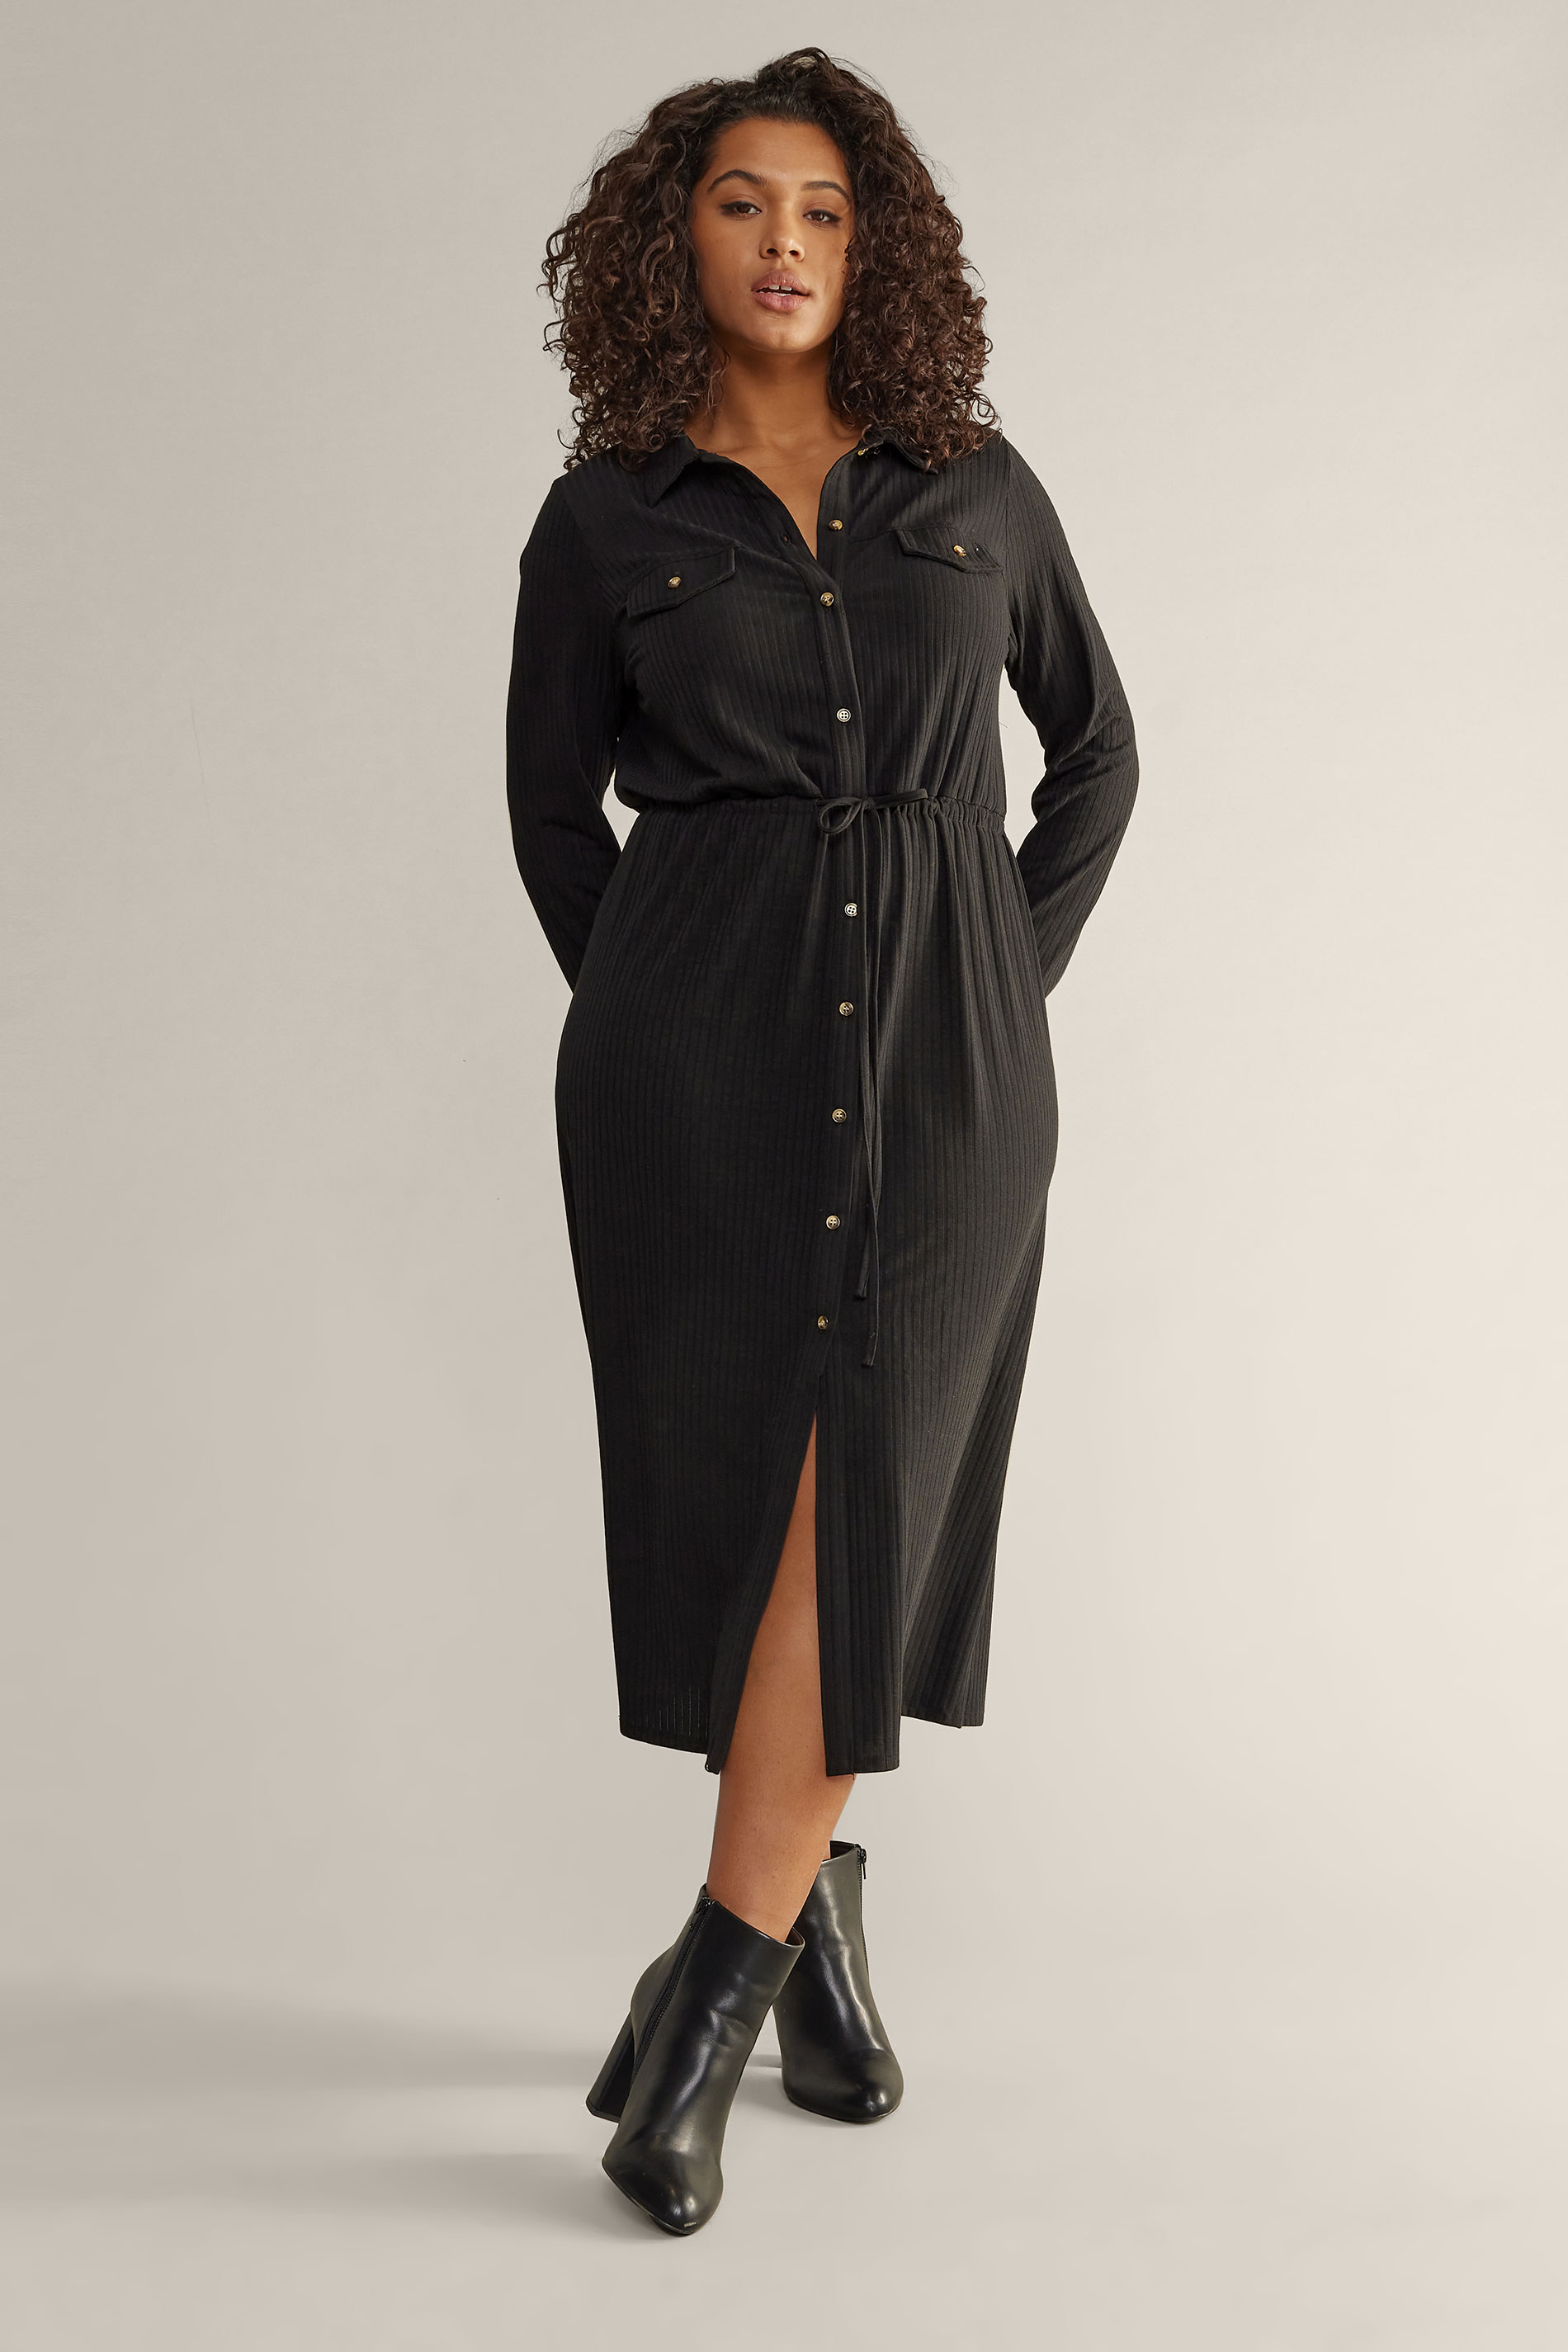 EVANS Plus Size Black Ribbed Utility Dress | Yours Clothing 2